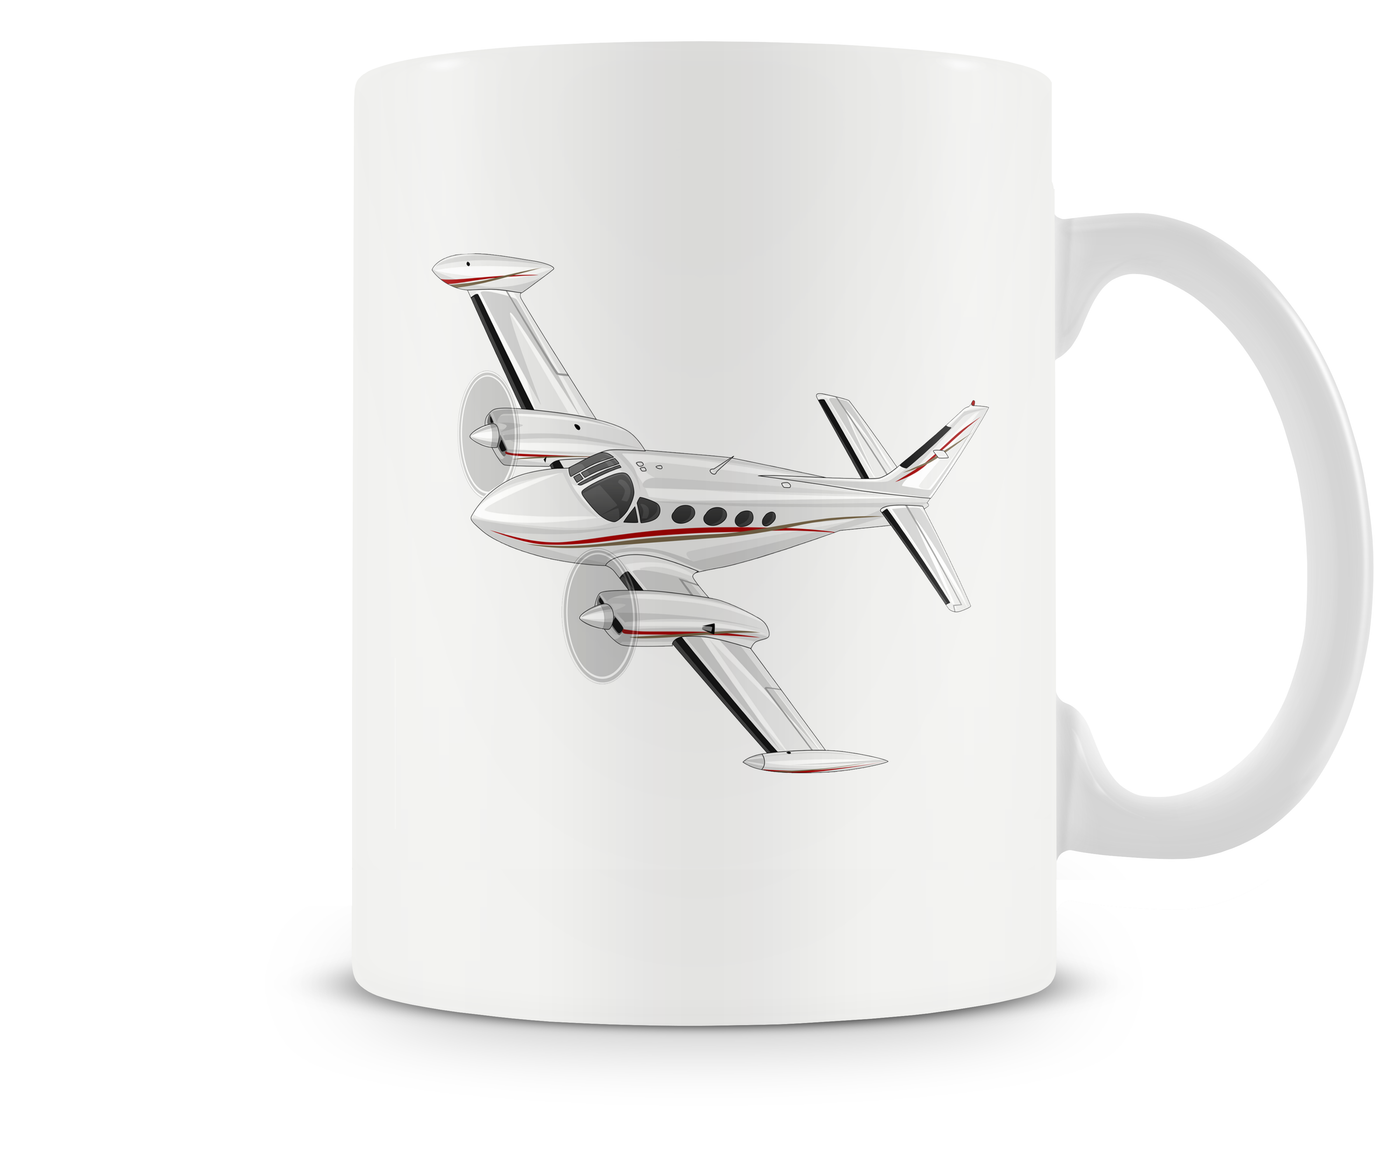 Cessna 340 Mug - Aircraft Mugs